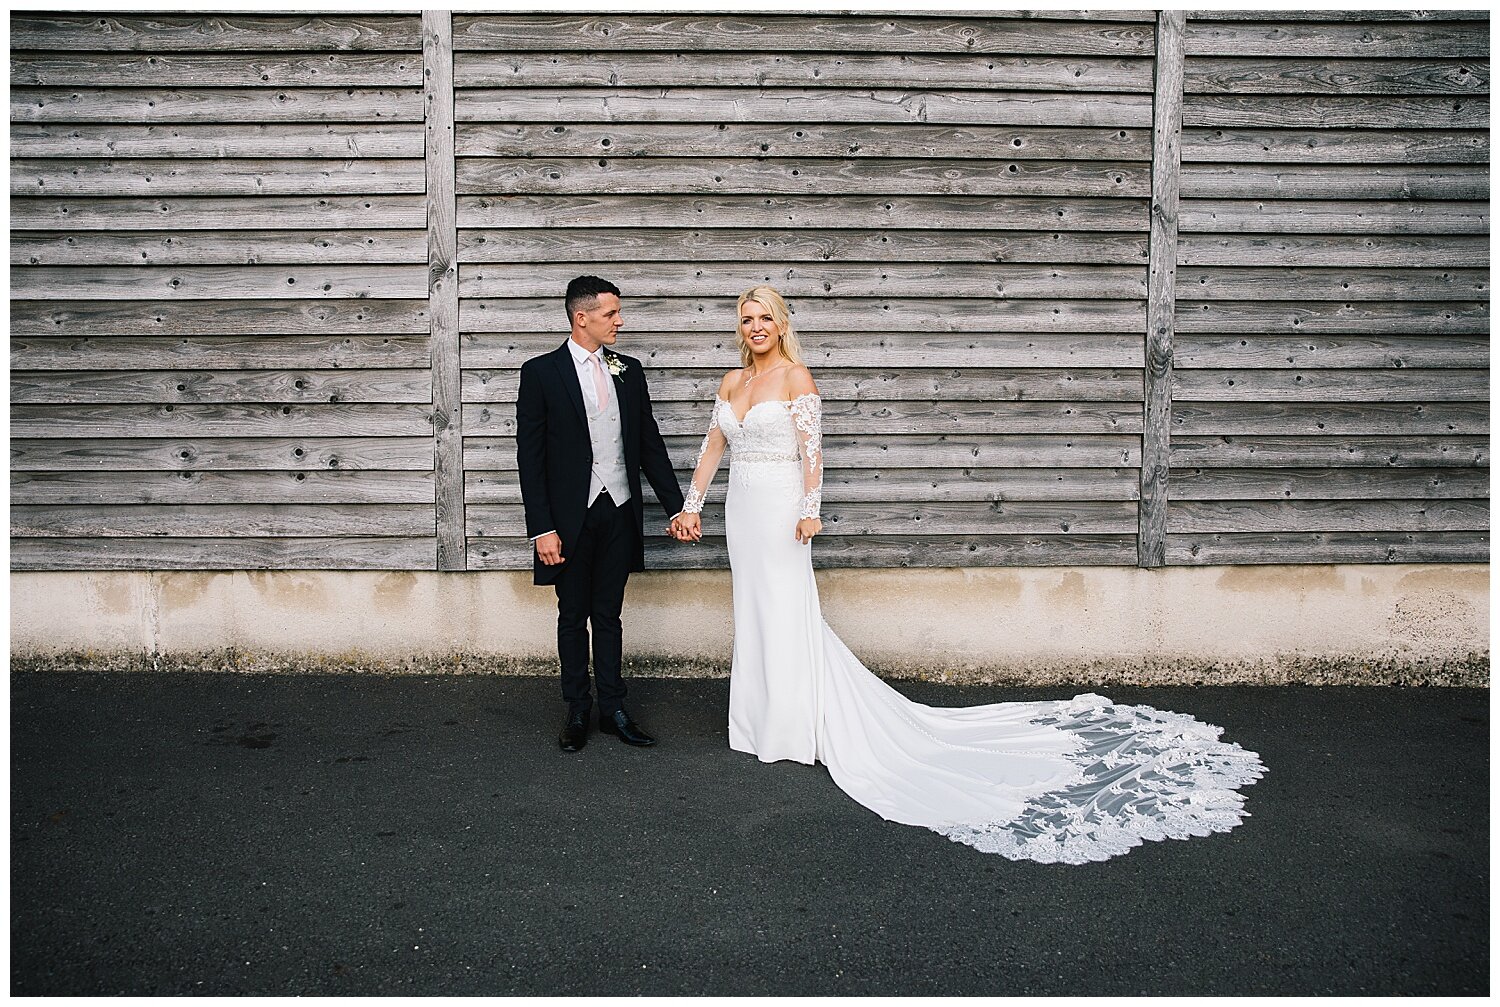 Ellie and Aled's white wedding salisbury 2021-08-18_0042.jpg